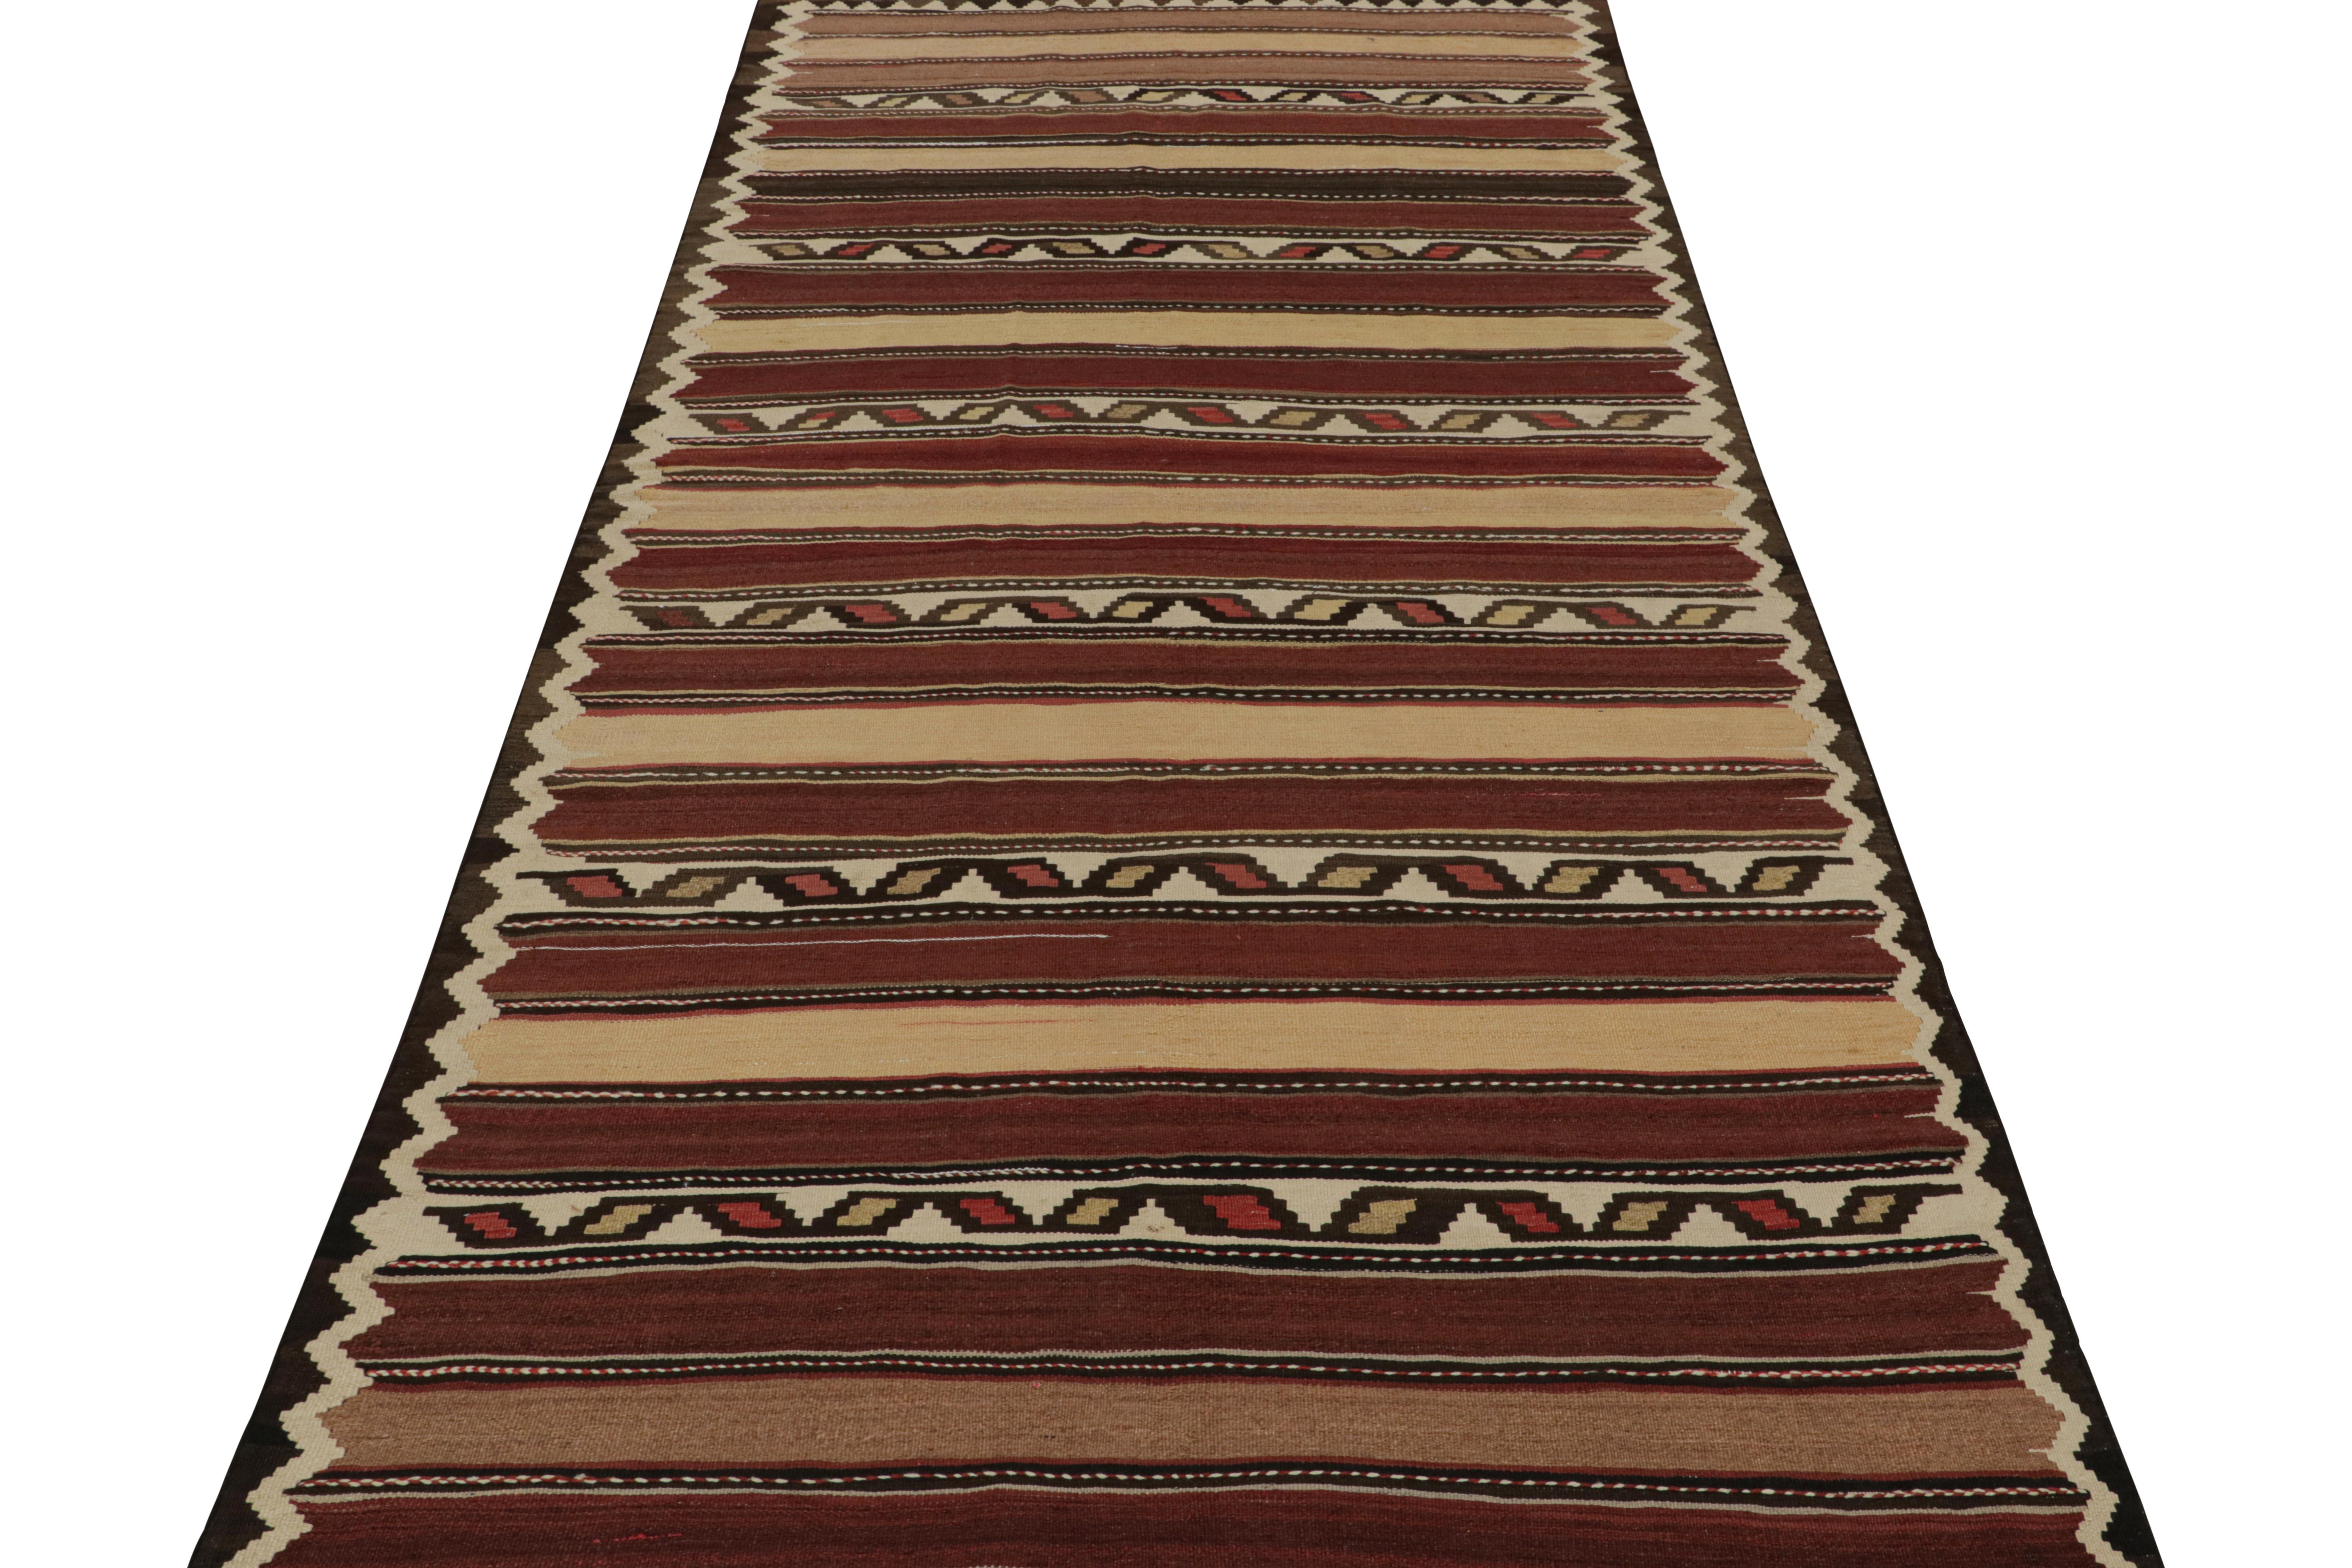 Tribal Vintage Afghani tribal Kilim rug, with Geometric patterns, from Rug & Kilim For Sale